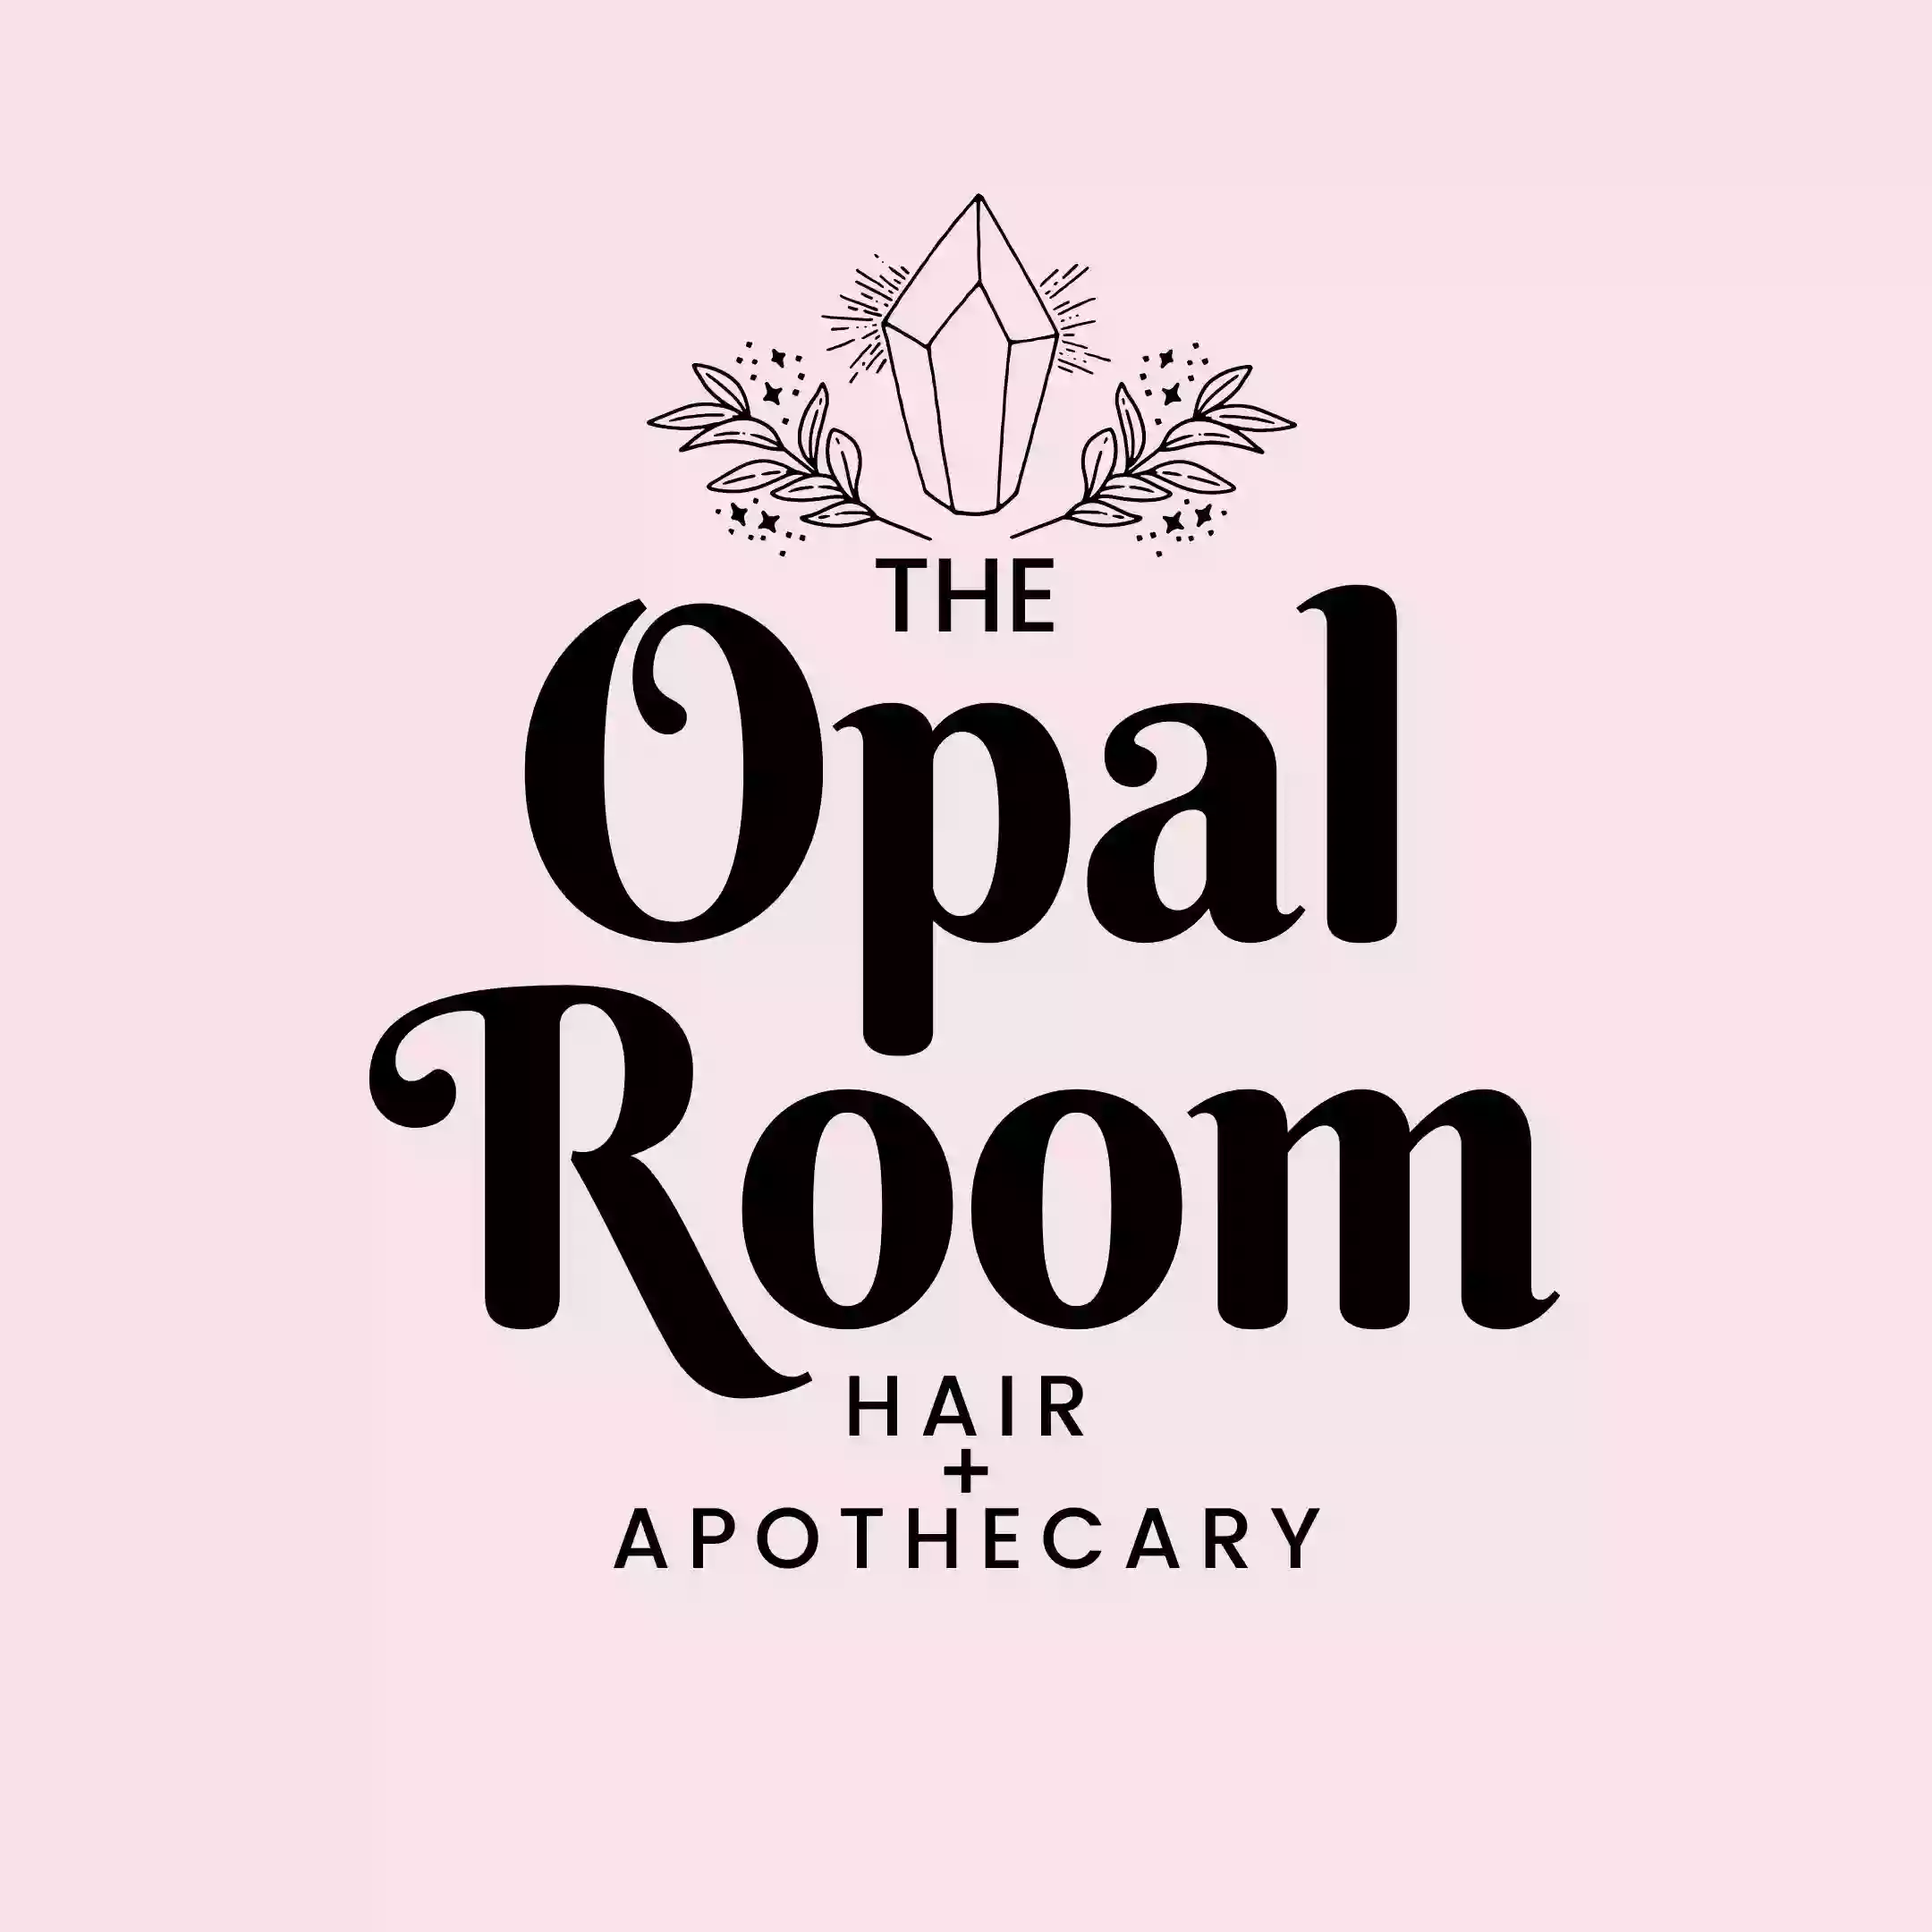 The Opal Room